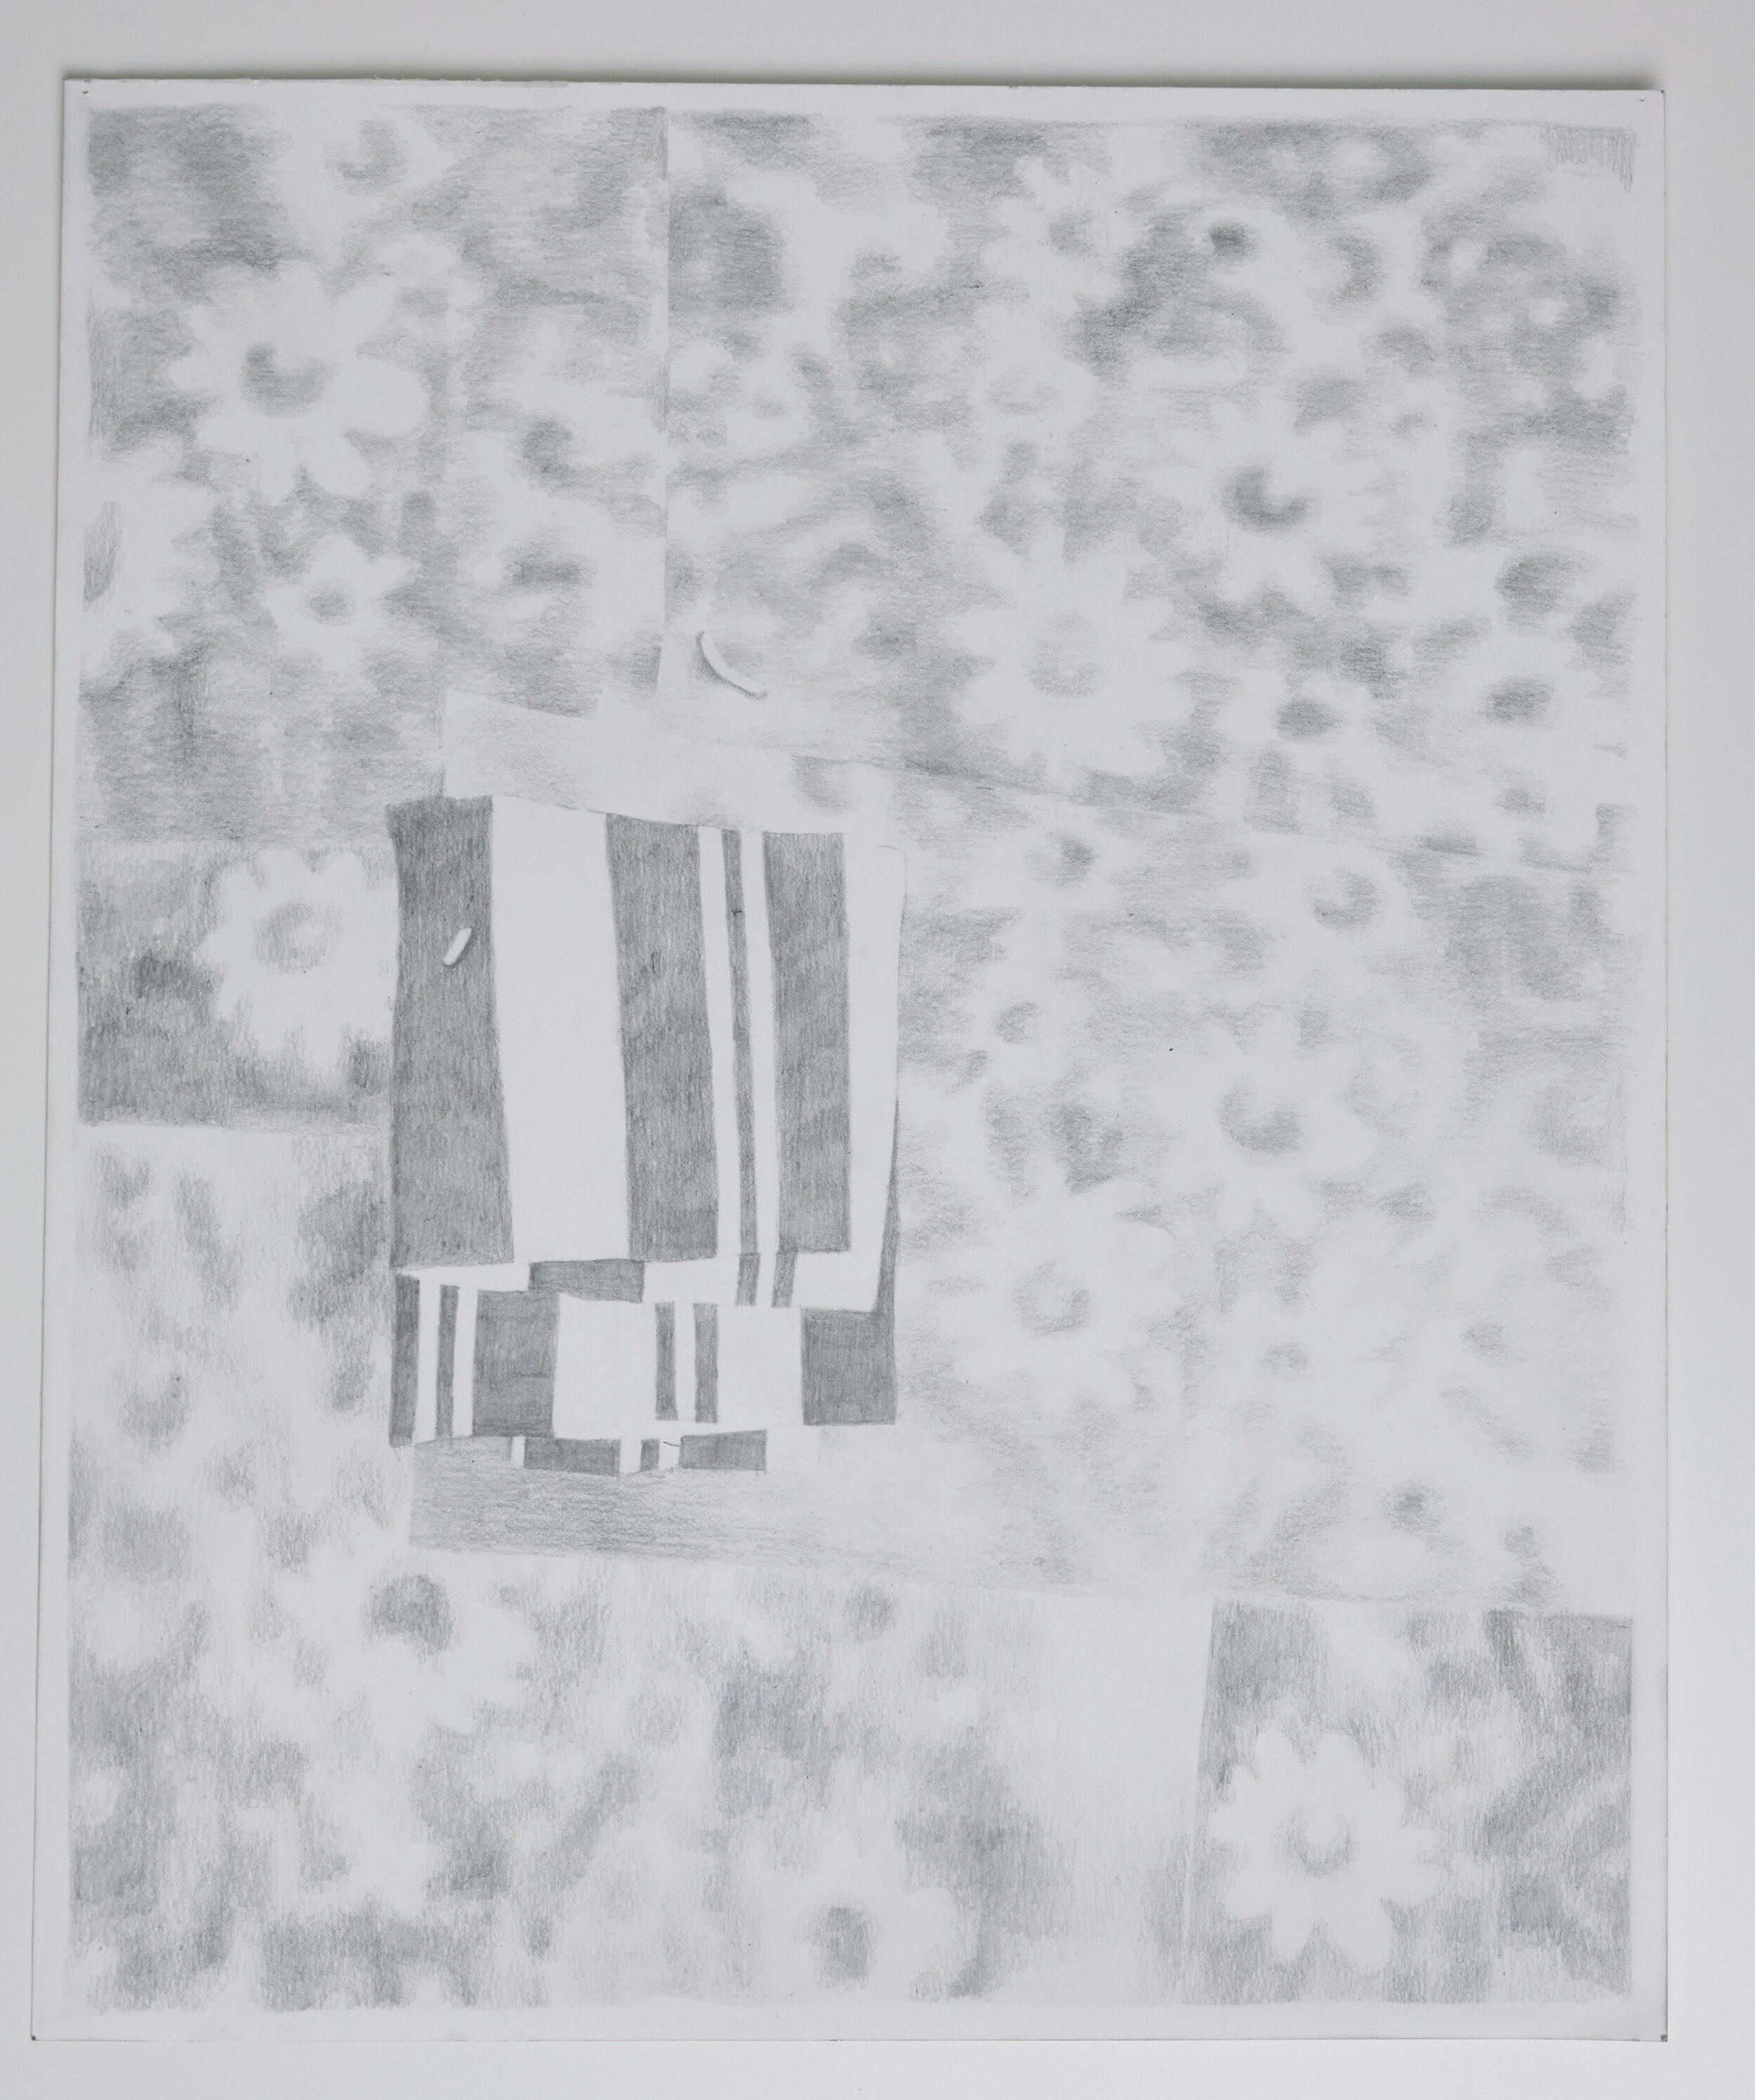  Untitled (Garden and Textile)  Graphite on Bristol paper 2021  14” x 17” 